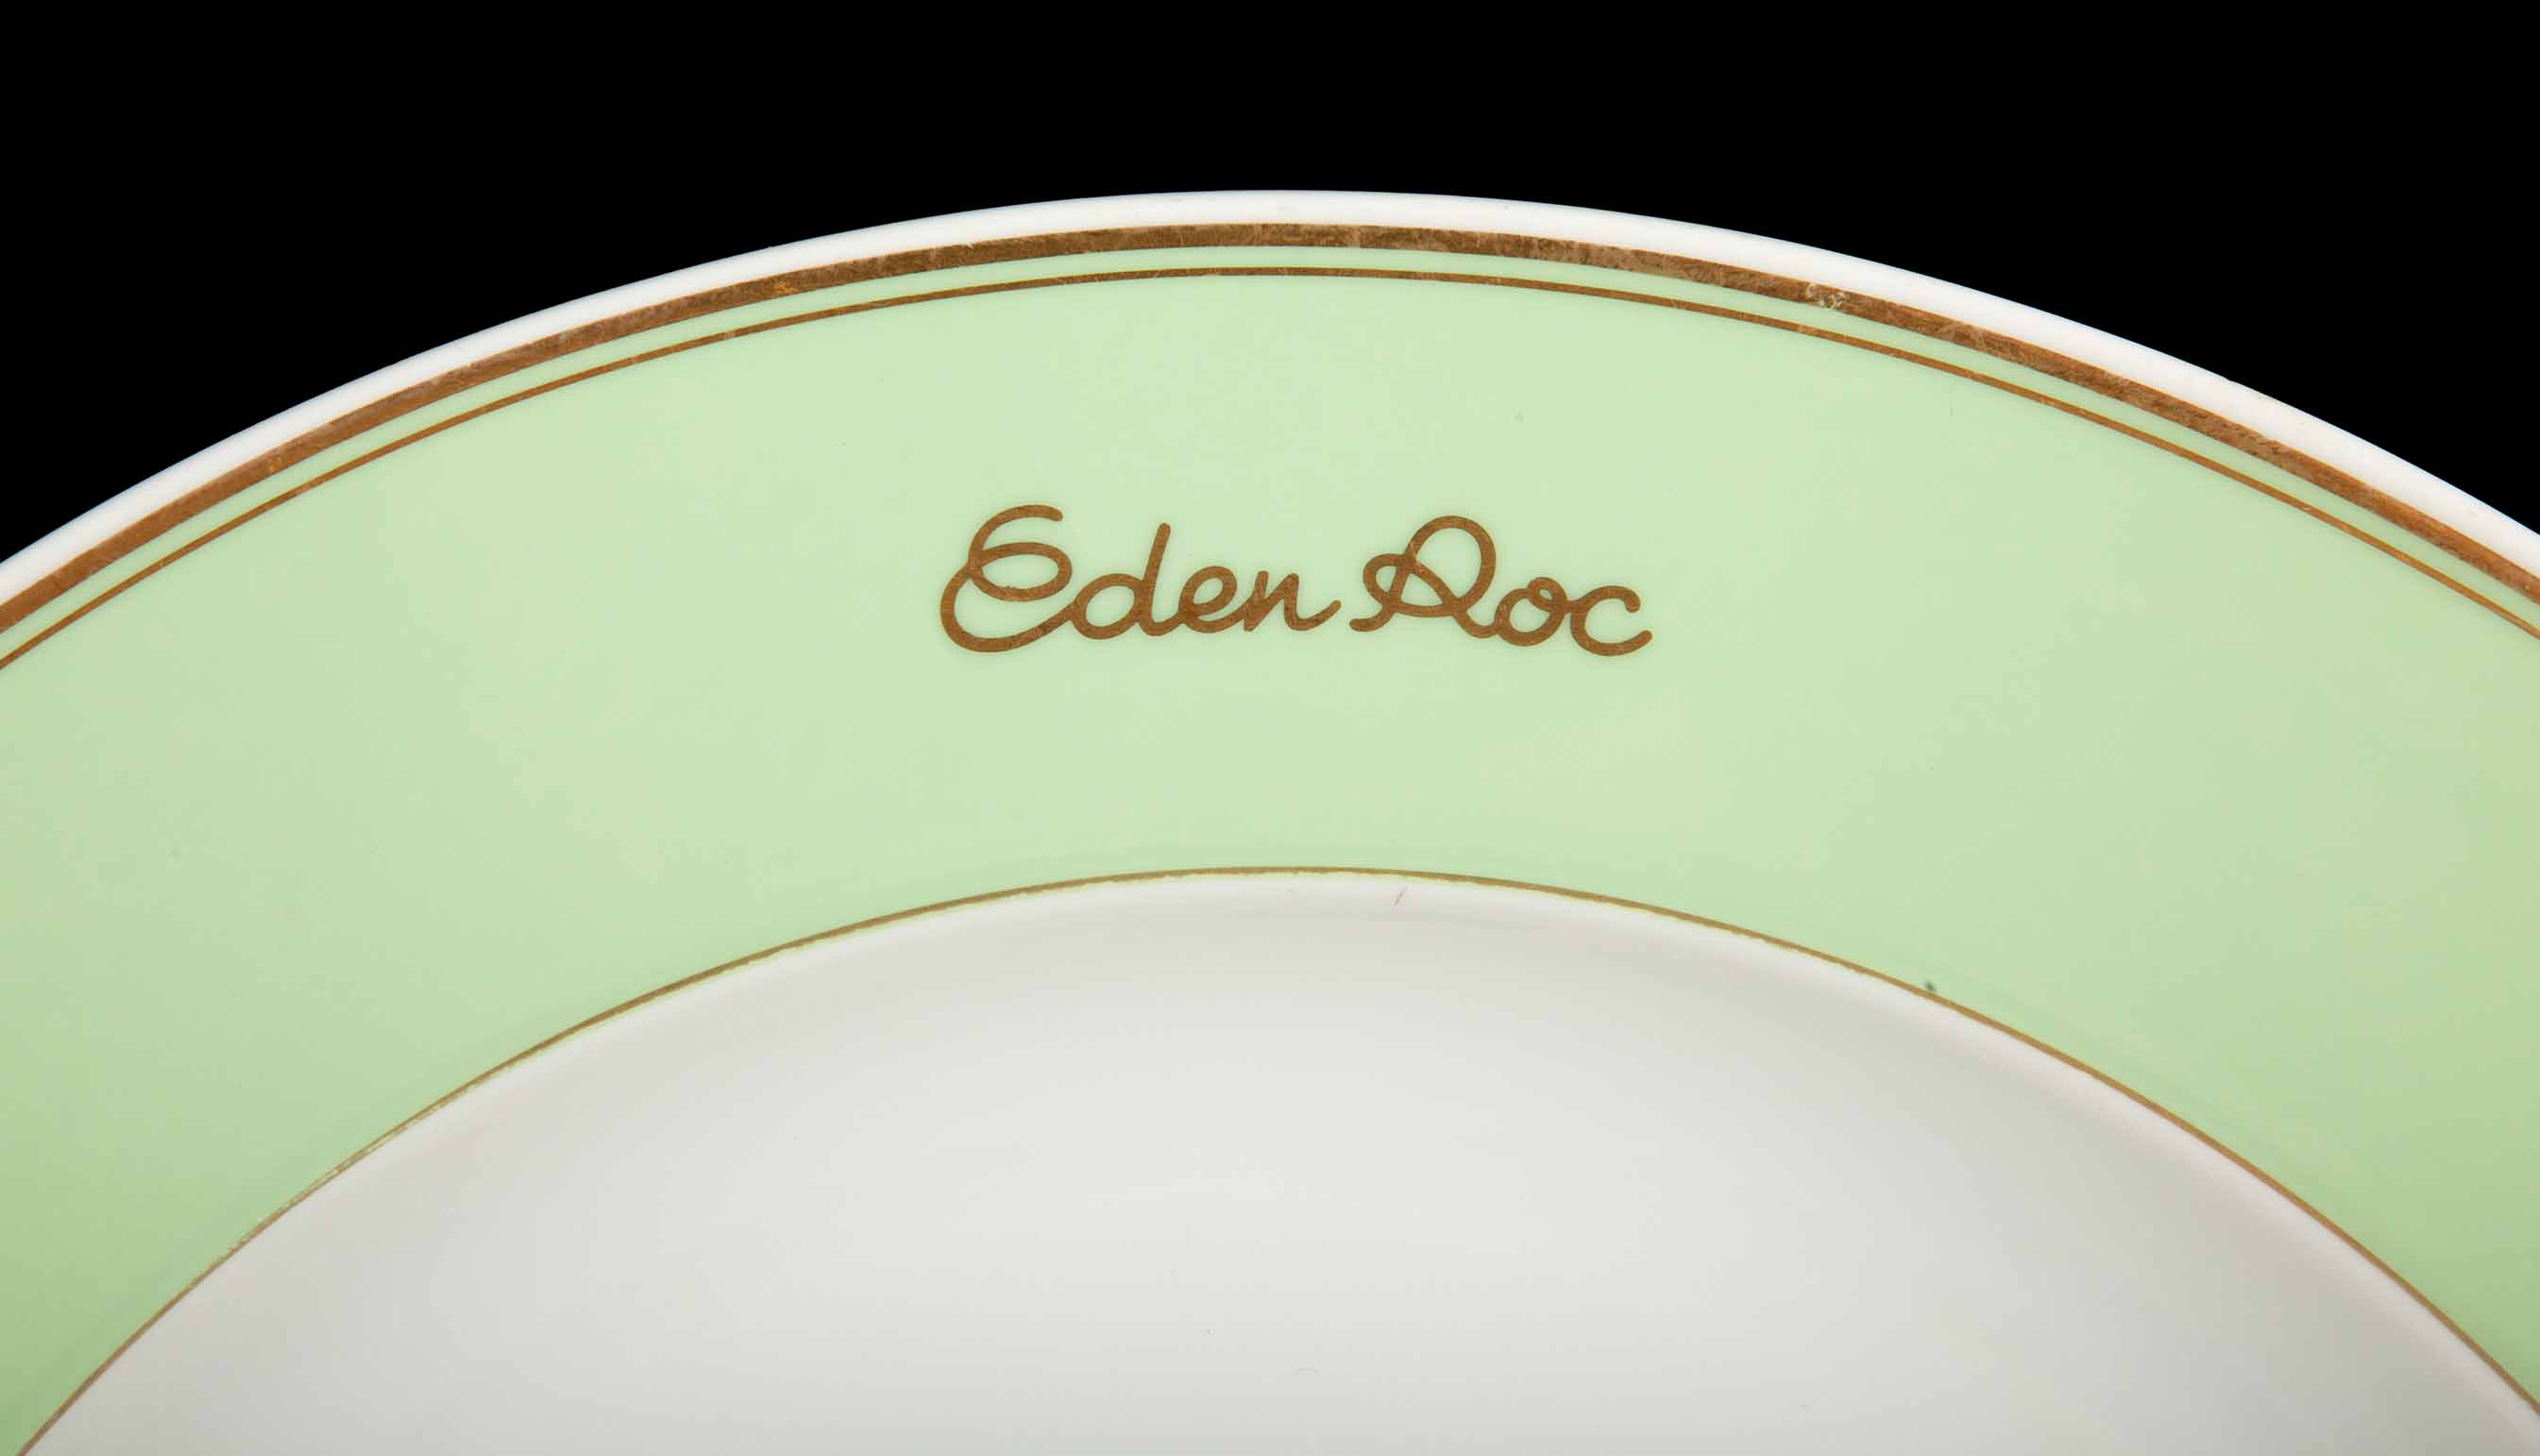 Hotel du Cap-Eden-Roc Charger/Dinner Plate: A Taste of Elegance and History 12